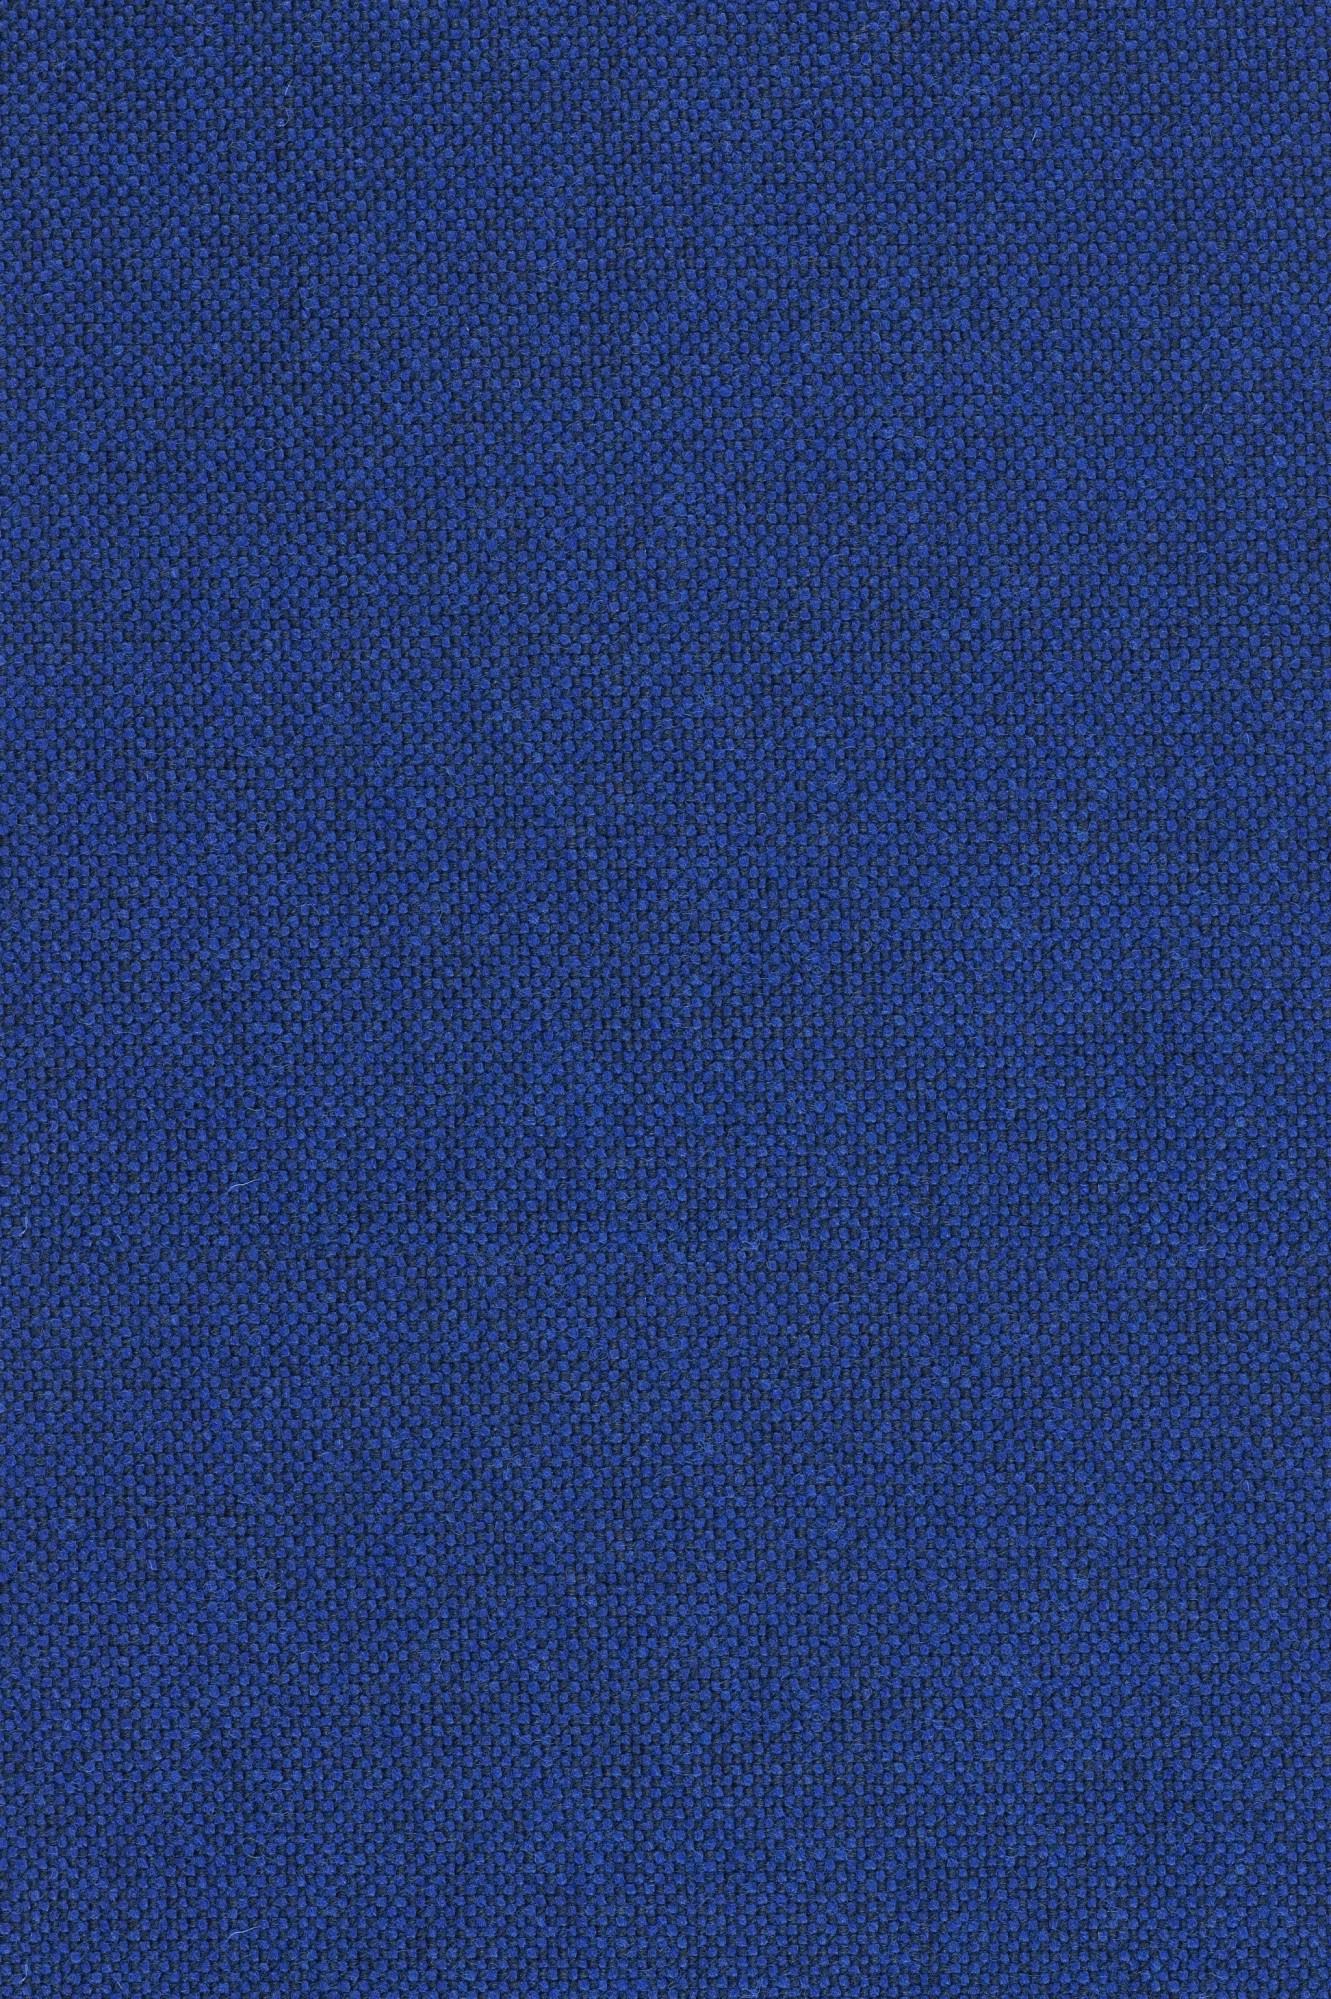 Fabric sample Hallingdal 65 754 blue